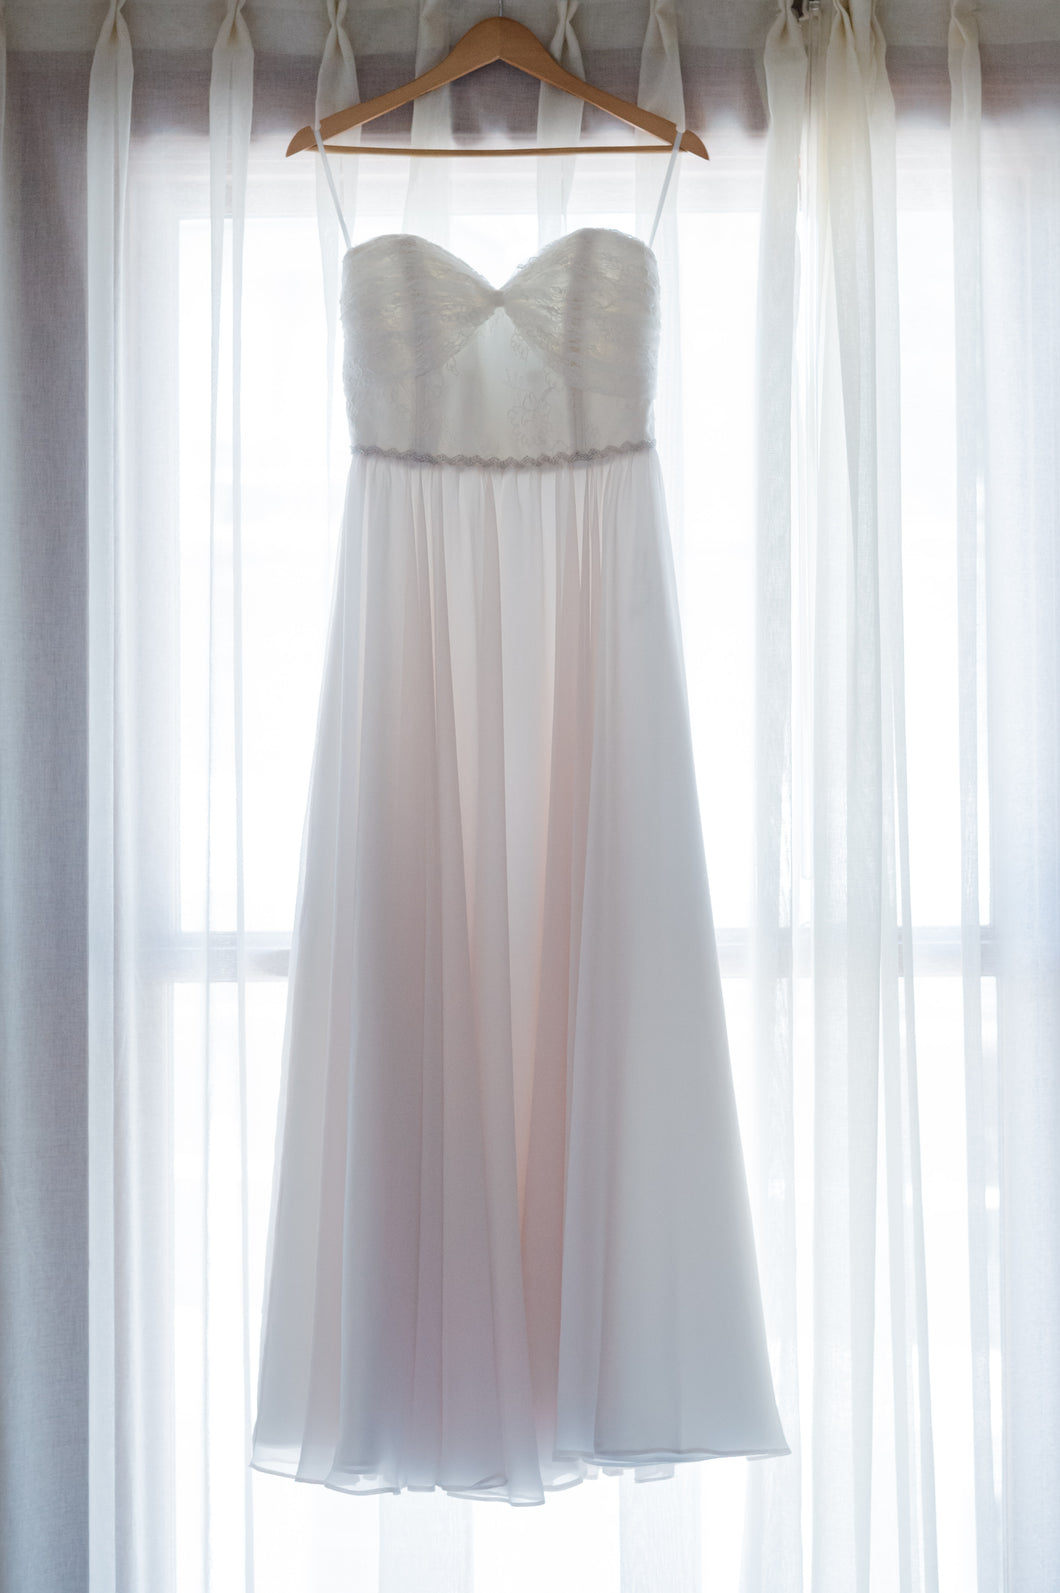 Truvelle 'Elisabeth' size 6 used wedding dress front view on hanger